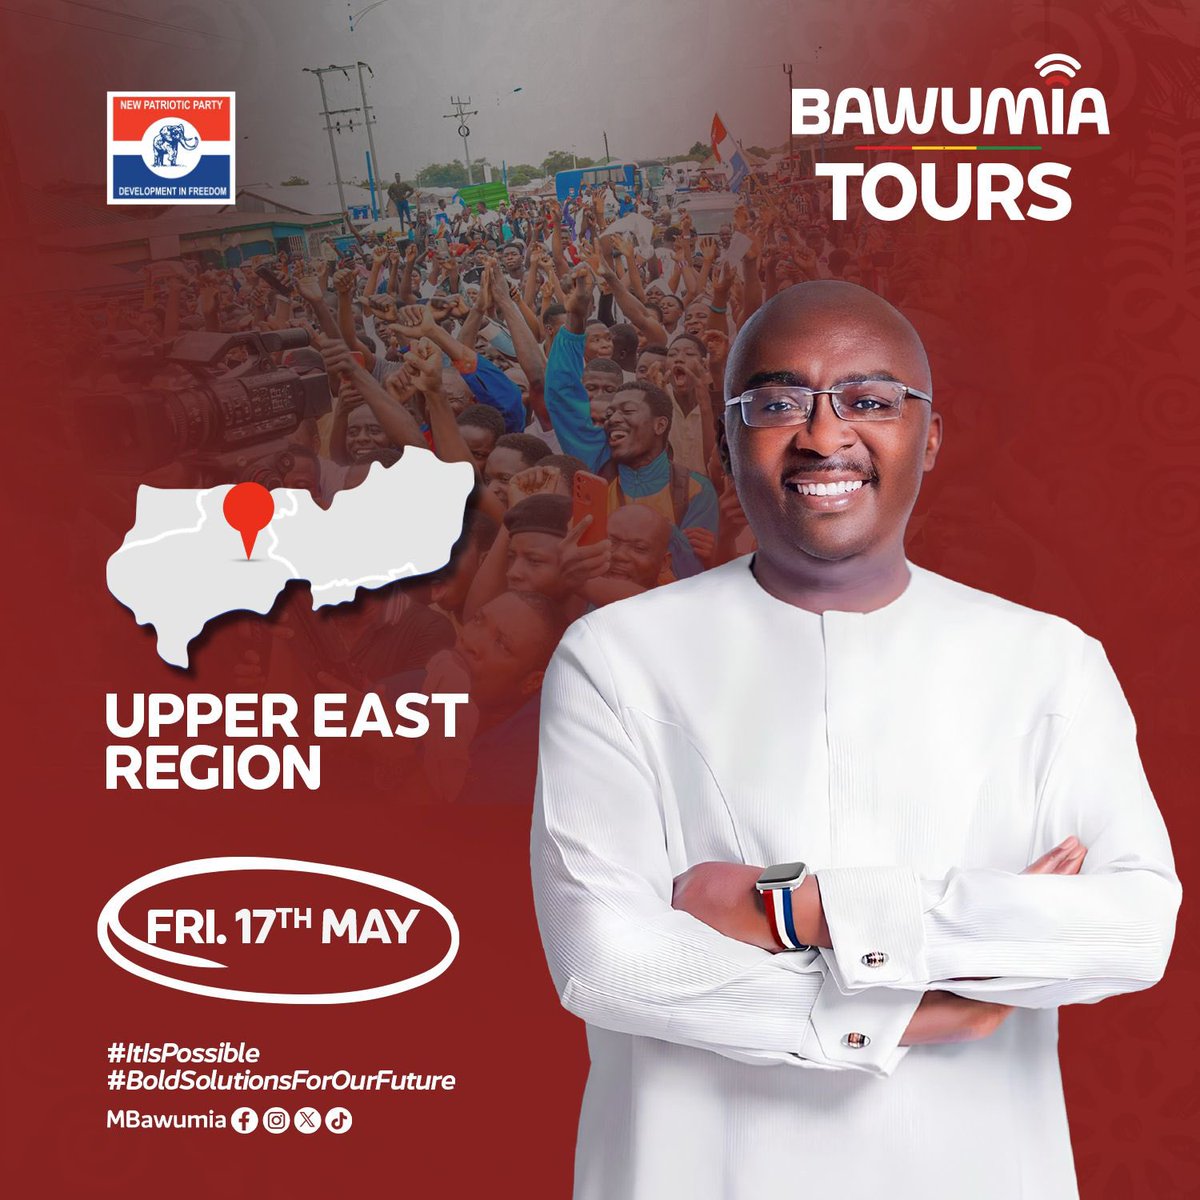 The Next President Of Ghana, H. E Dr. Bawumiah tours Upper East Region Region.

#Bawumia2024 
#ItIsPossible 
#BoldSolutionsForOurFuture
#GhanasNextChapter 
#BawumiaTours